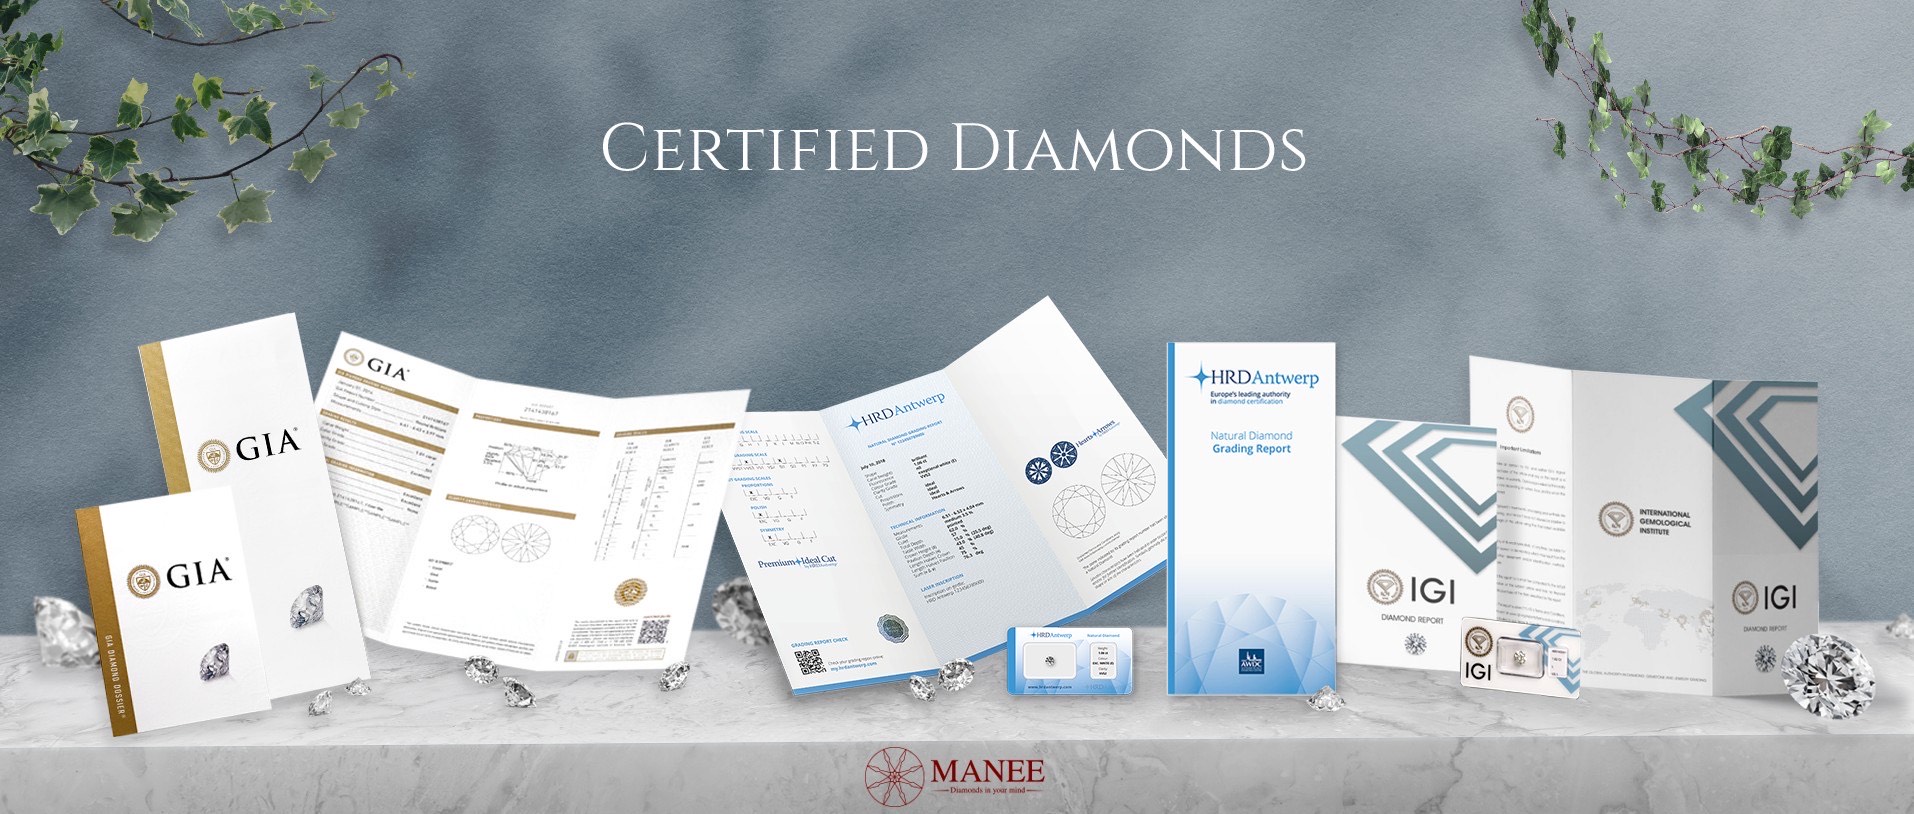 Buy Certified Diamonds Online - Diamonds By Manee